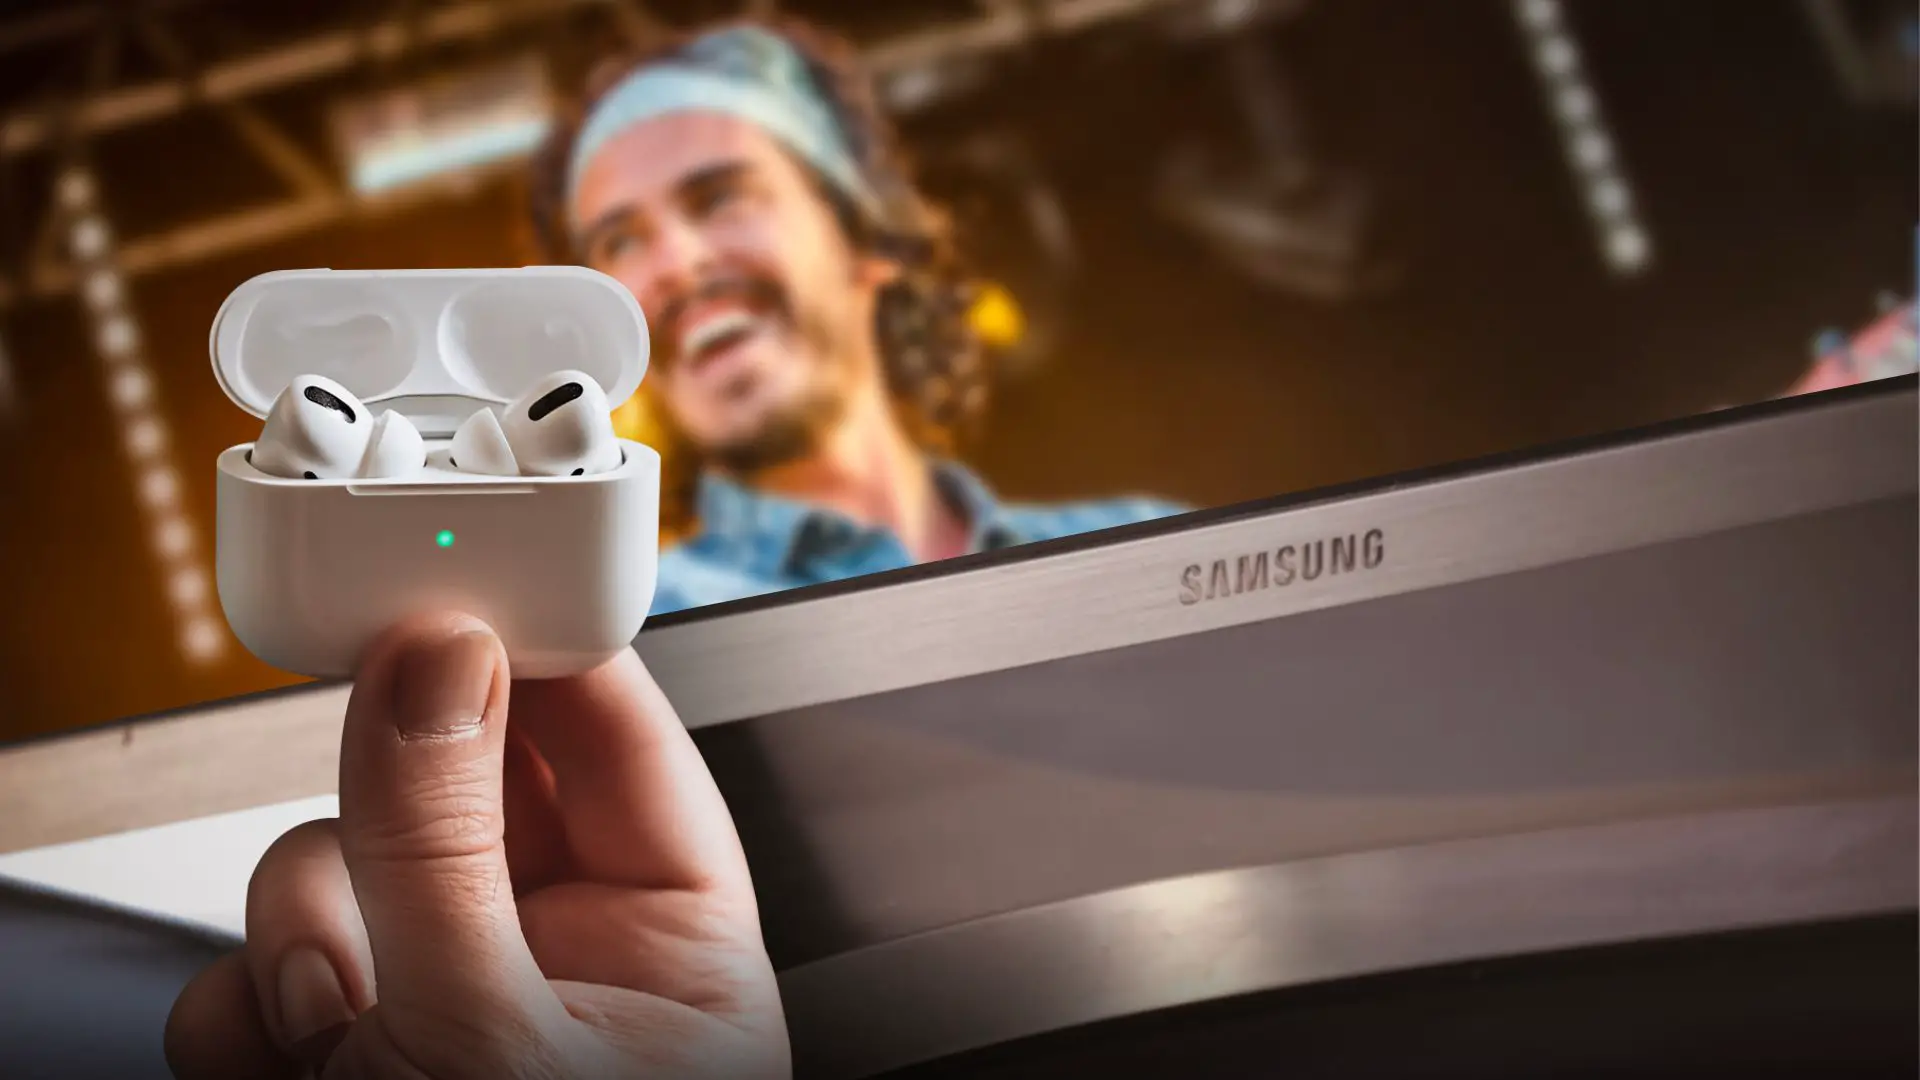 Airpods pairing via Bluetooth with Samsung TV